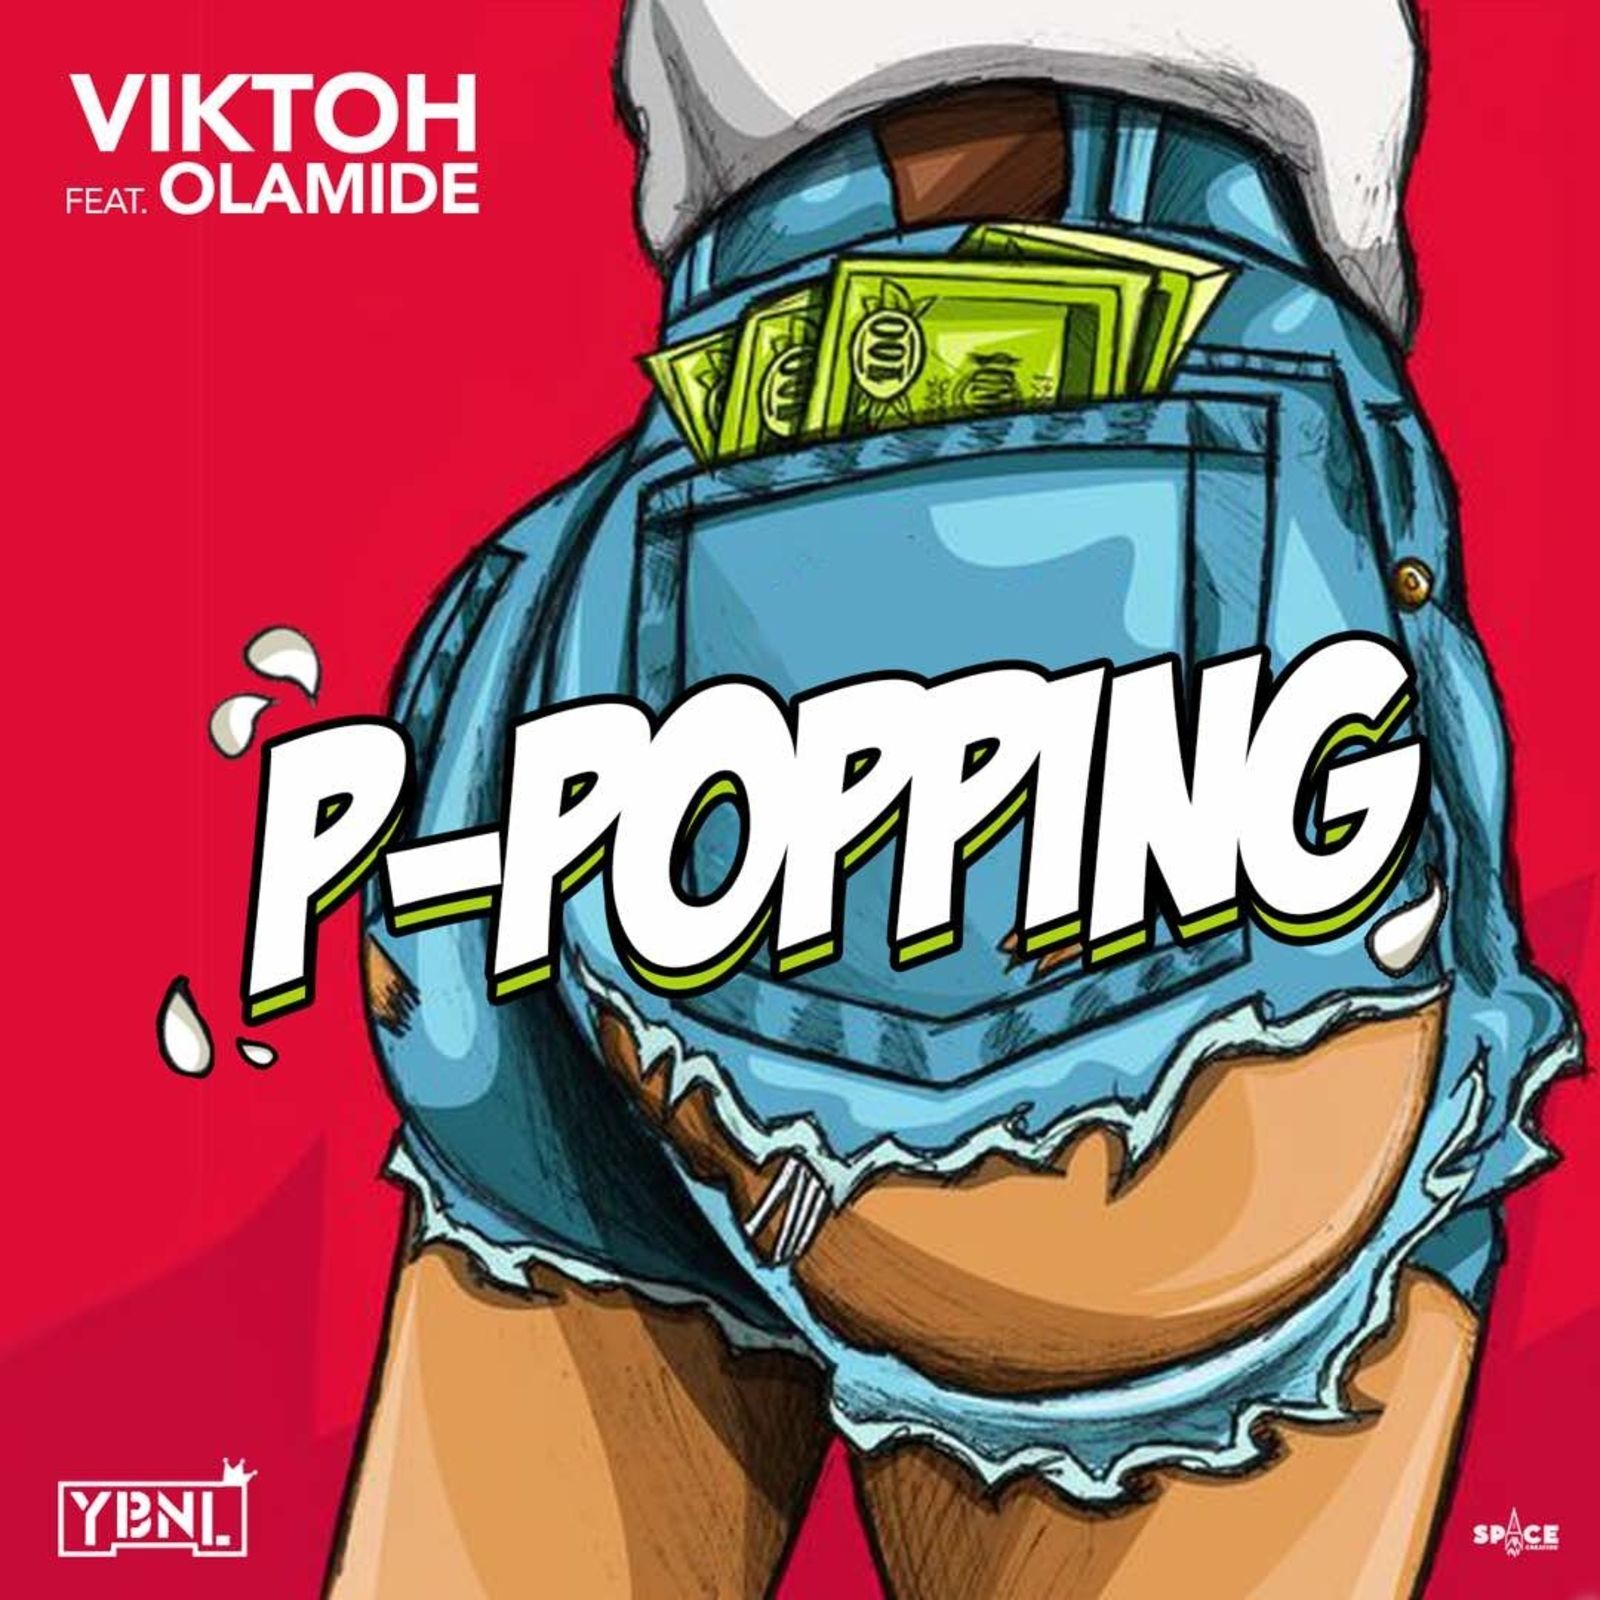 Viktoh ft. Olamide - P-POPPING (prod. by Pheelz) Artwork | AceWorldTeam.com